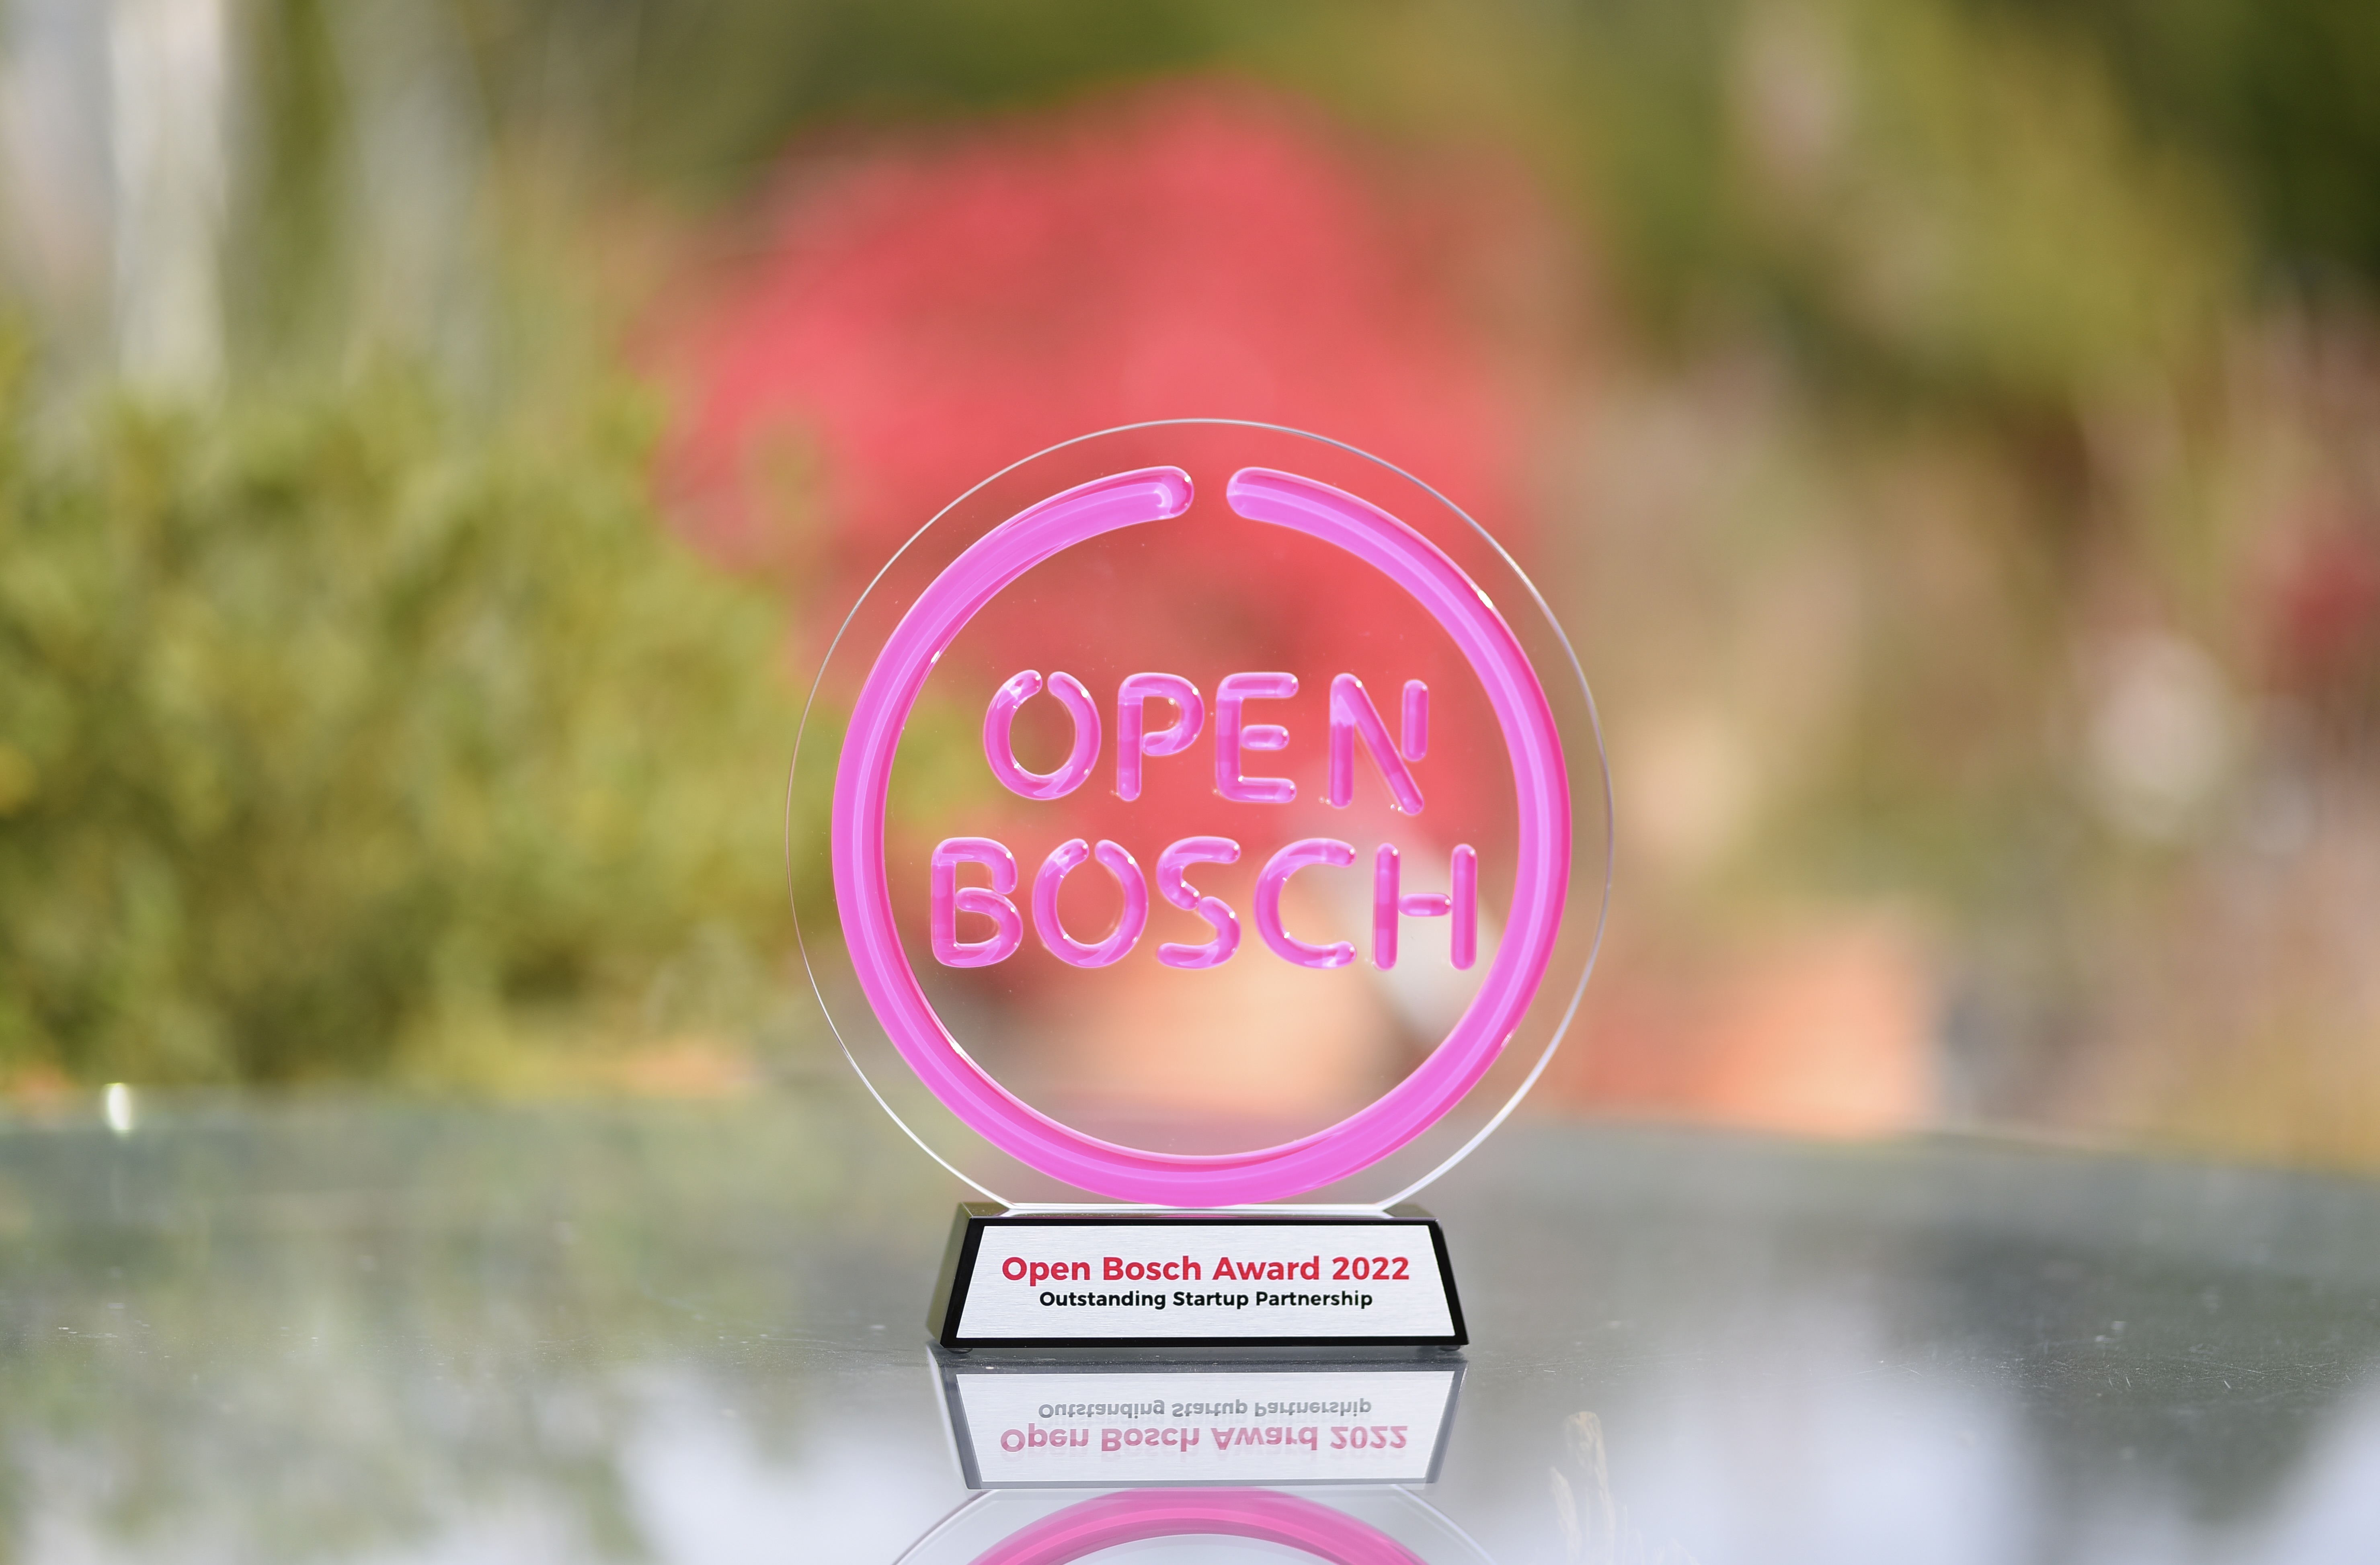 Open Bosch, Venture Client Partnerships for Startups